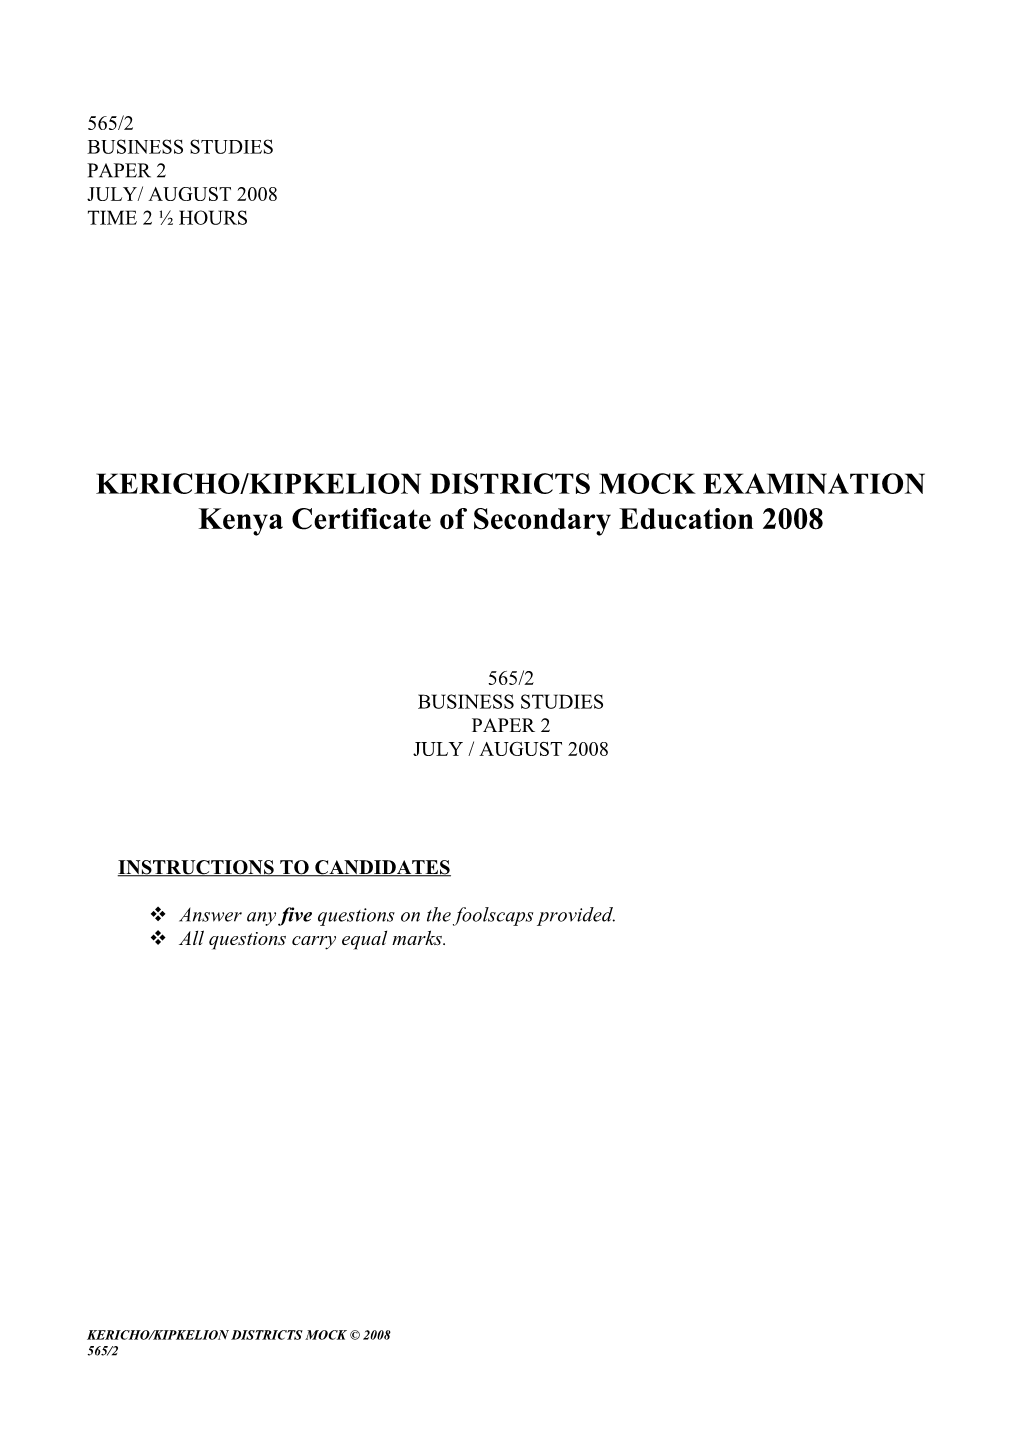 Kericho/Kipkelion Districts Mock Examination s1